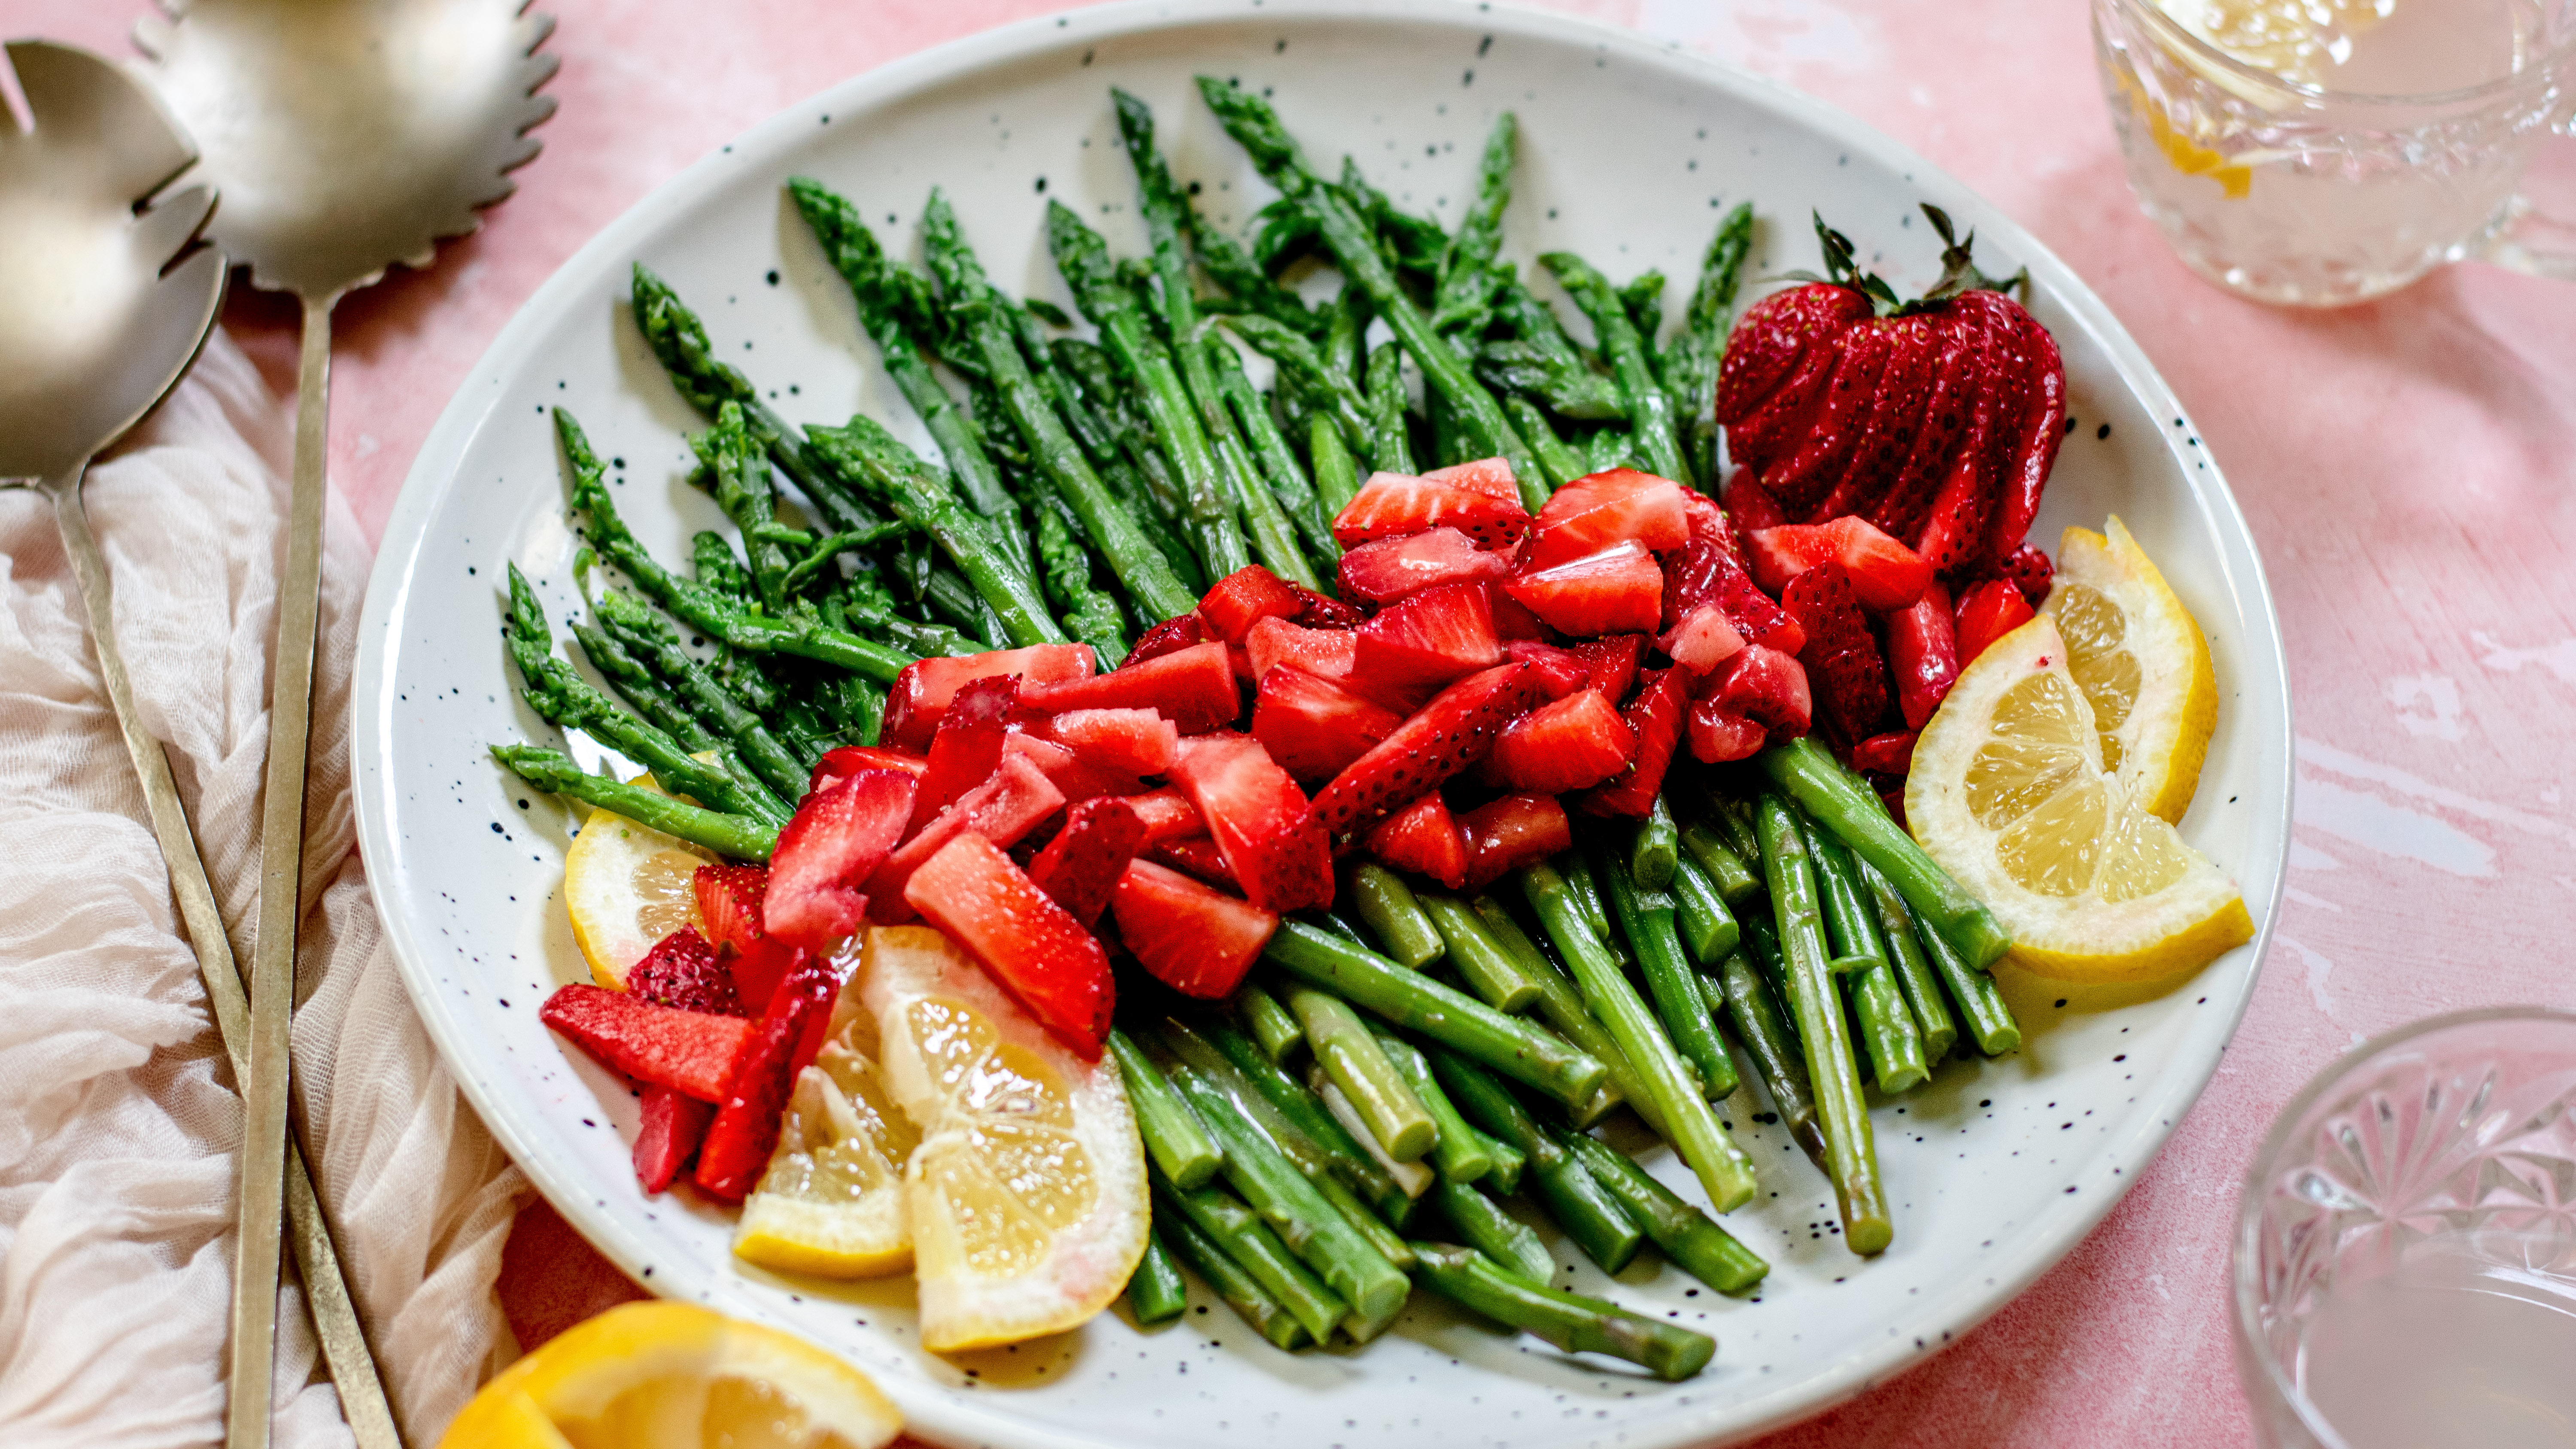 strawberry asparagus salad